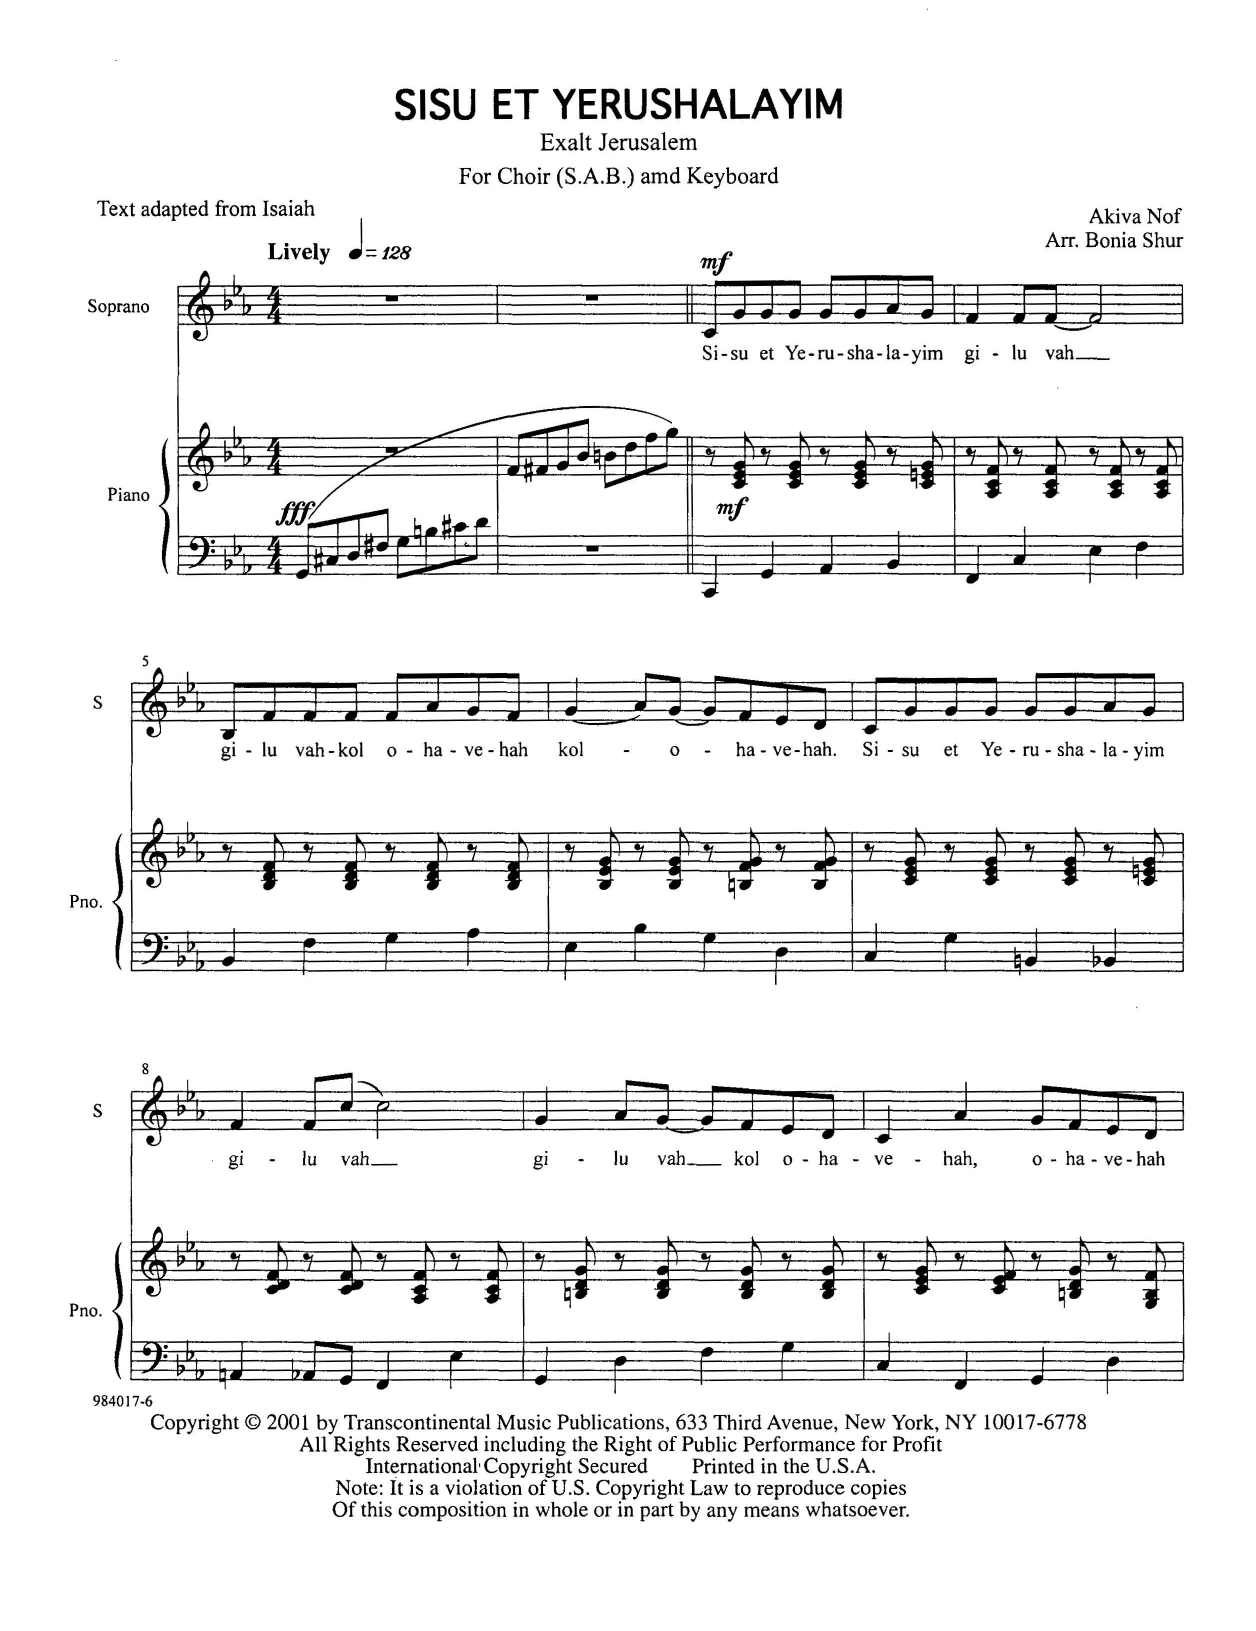 Download Akiva Nof Sisu Et Yerushalayim (Exalt Jerusalem) Sheet Music and learn how to play SAB Choir PDF digital score in minutes